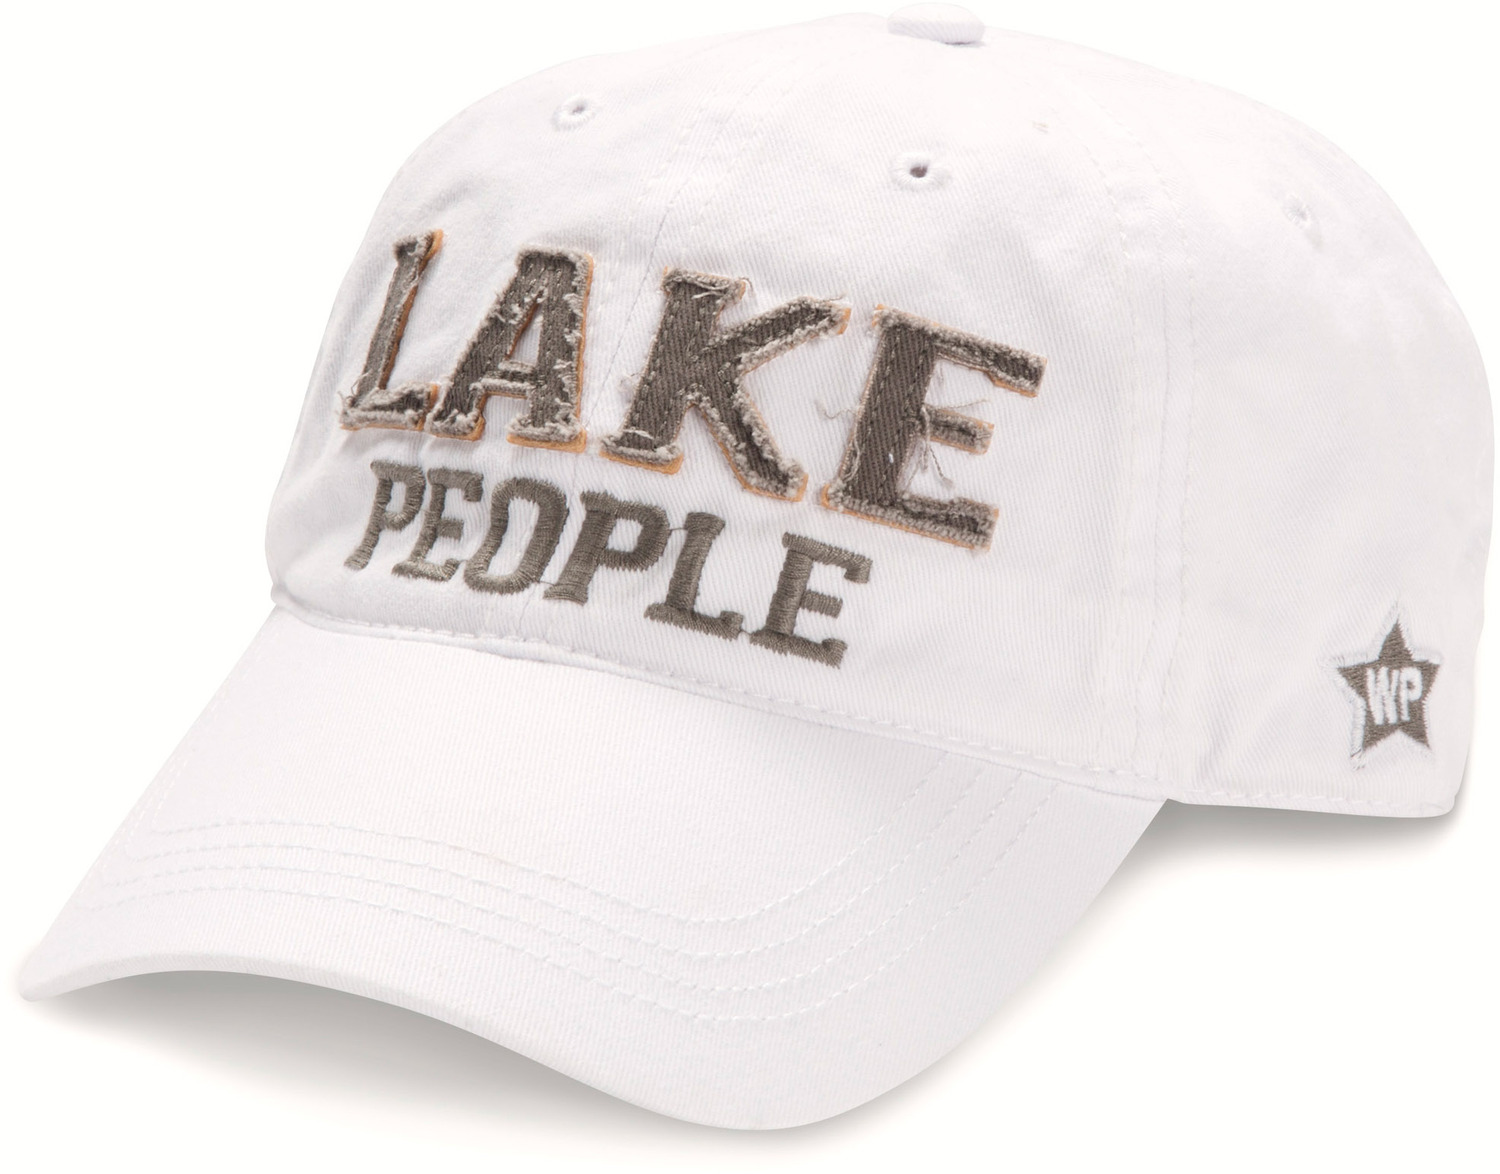 Lake People by We People - White Unisex Adjustable Lake Hat